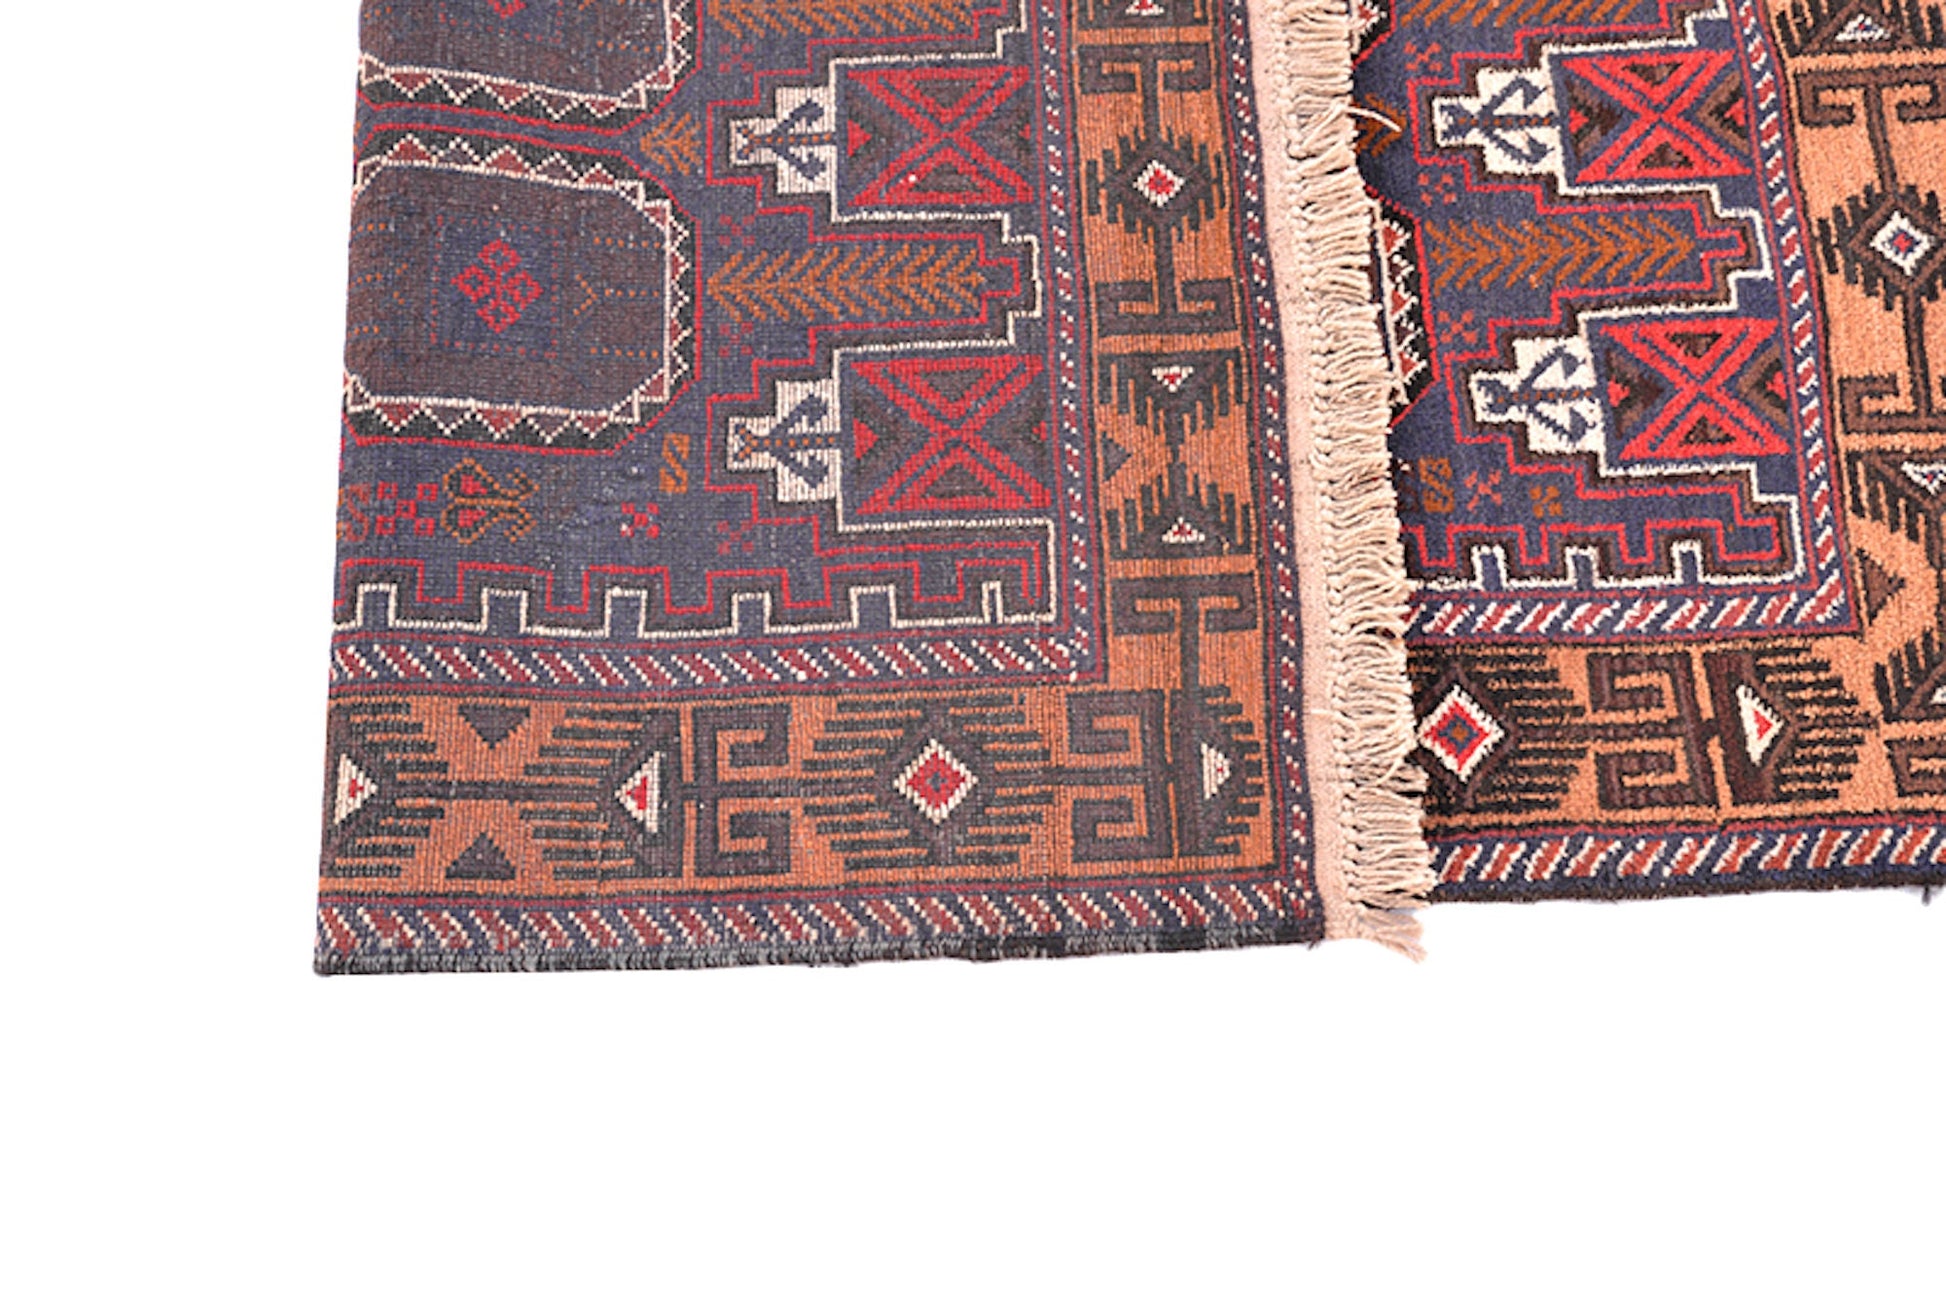 3 x 5 Dark Vintage Rug with Red Navy Geometric Background and Orange Navy Tribal Border | Wool Soft Low Pile Rustic Home Rug